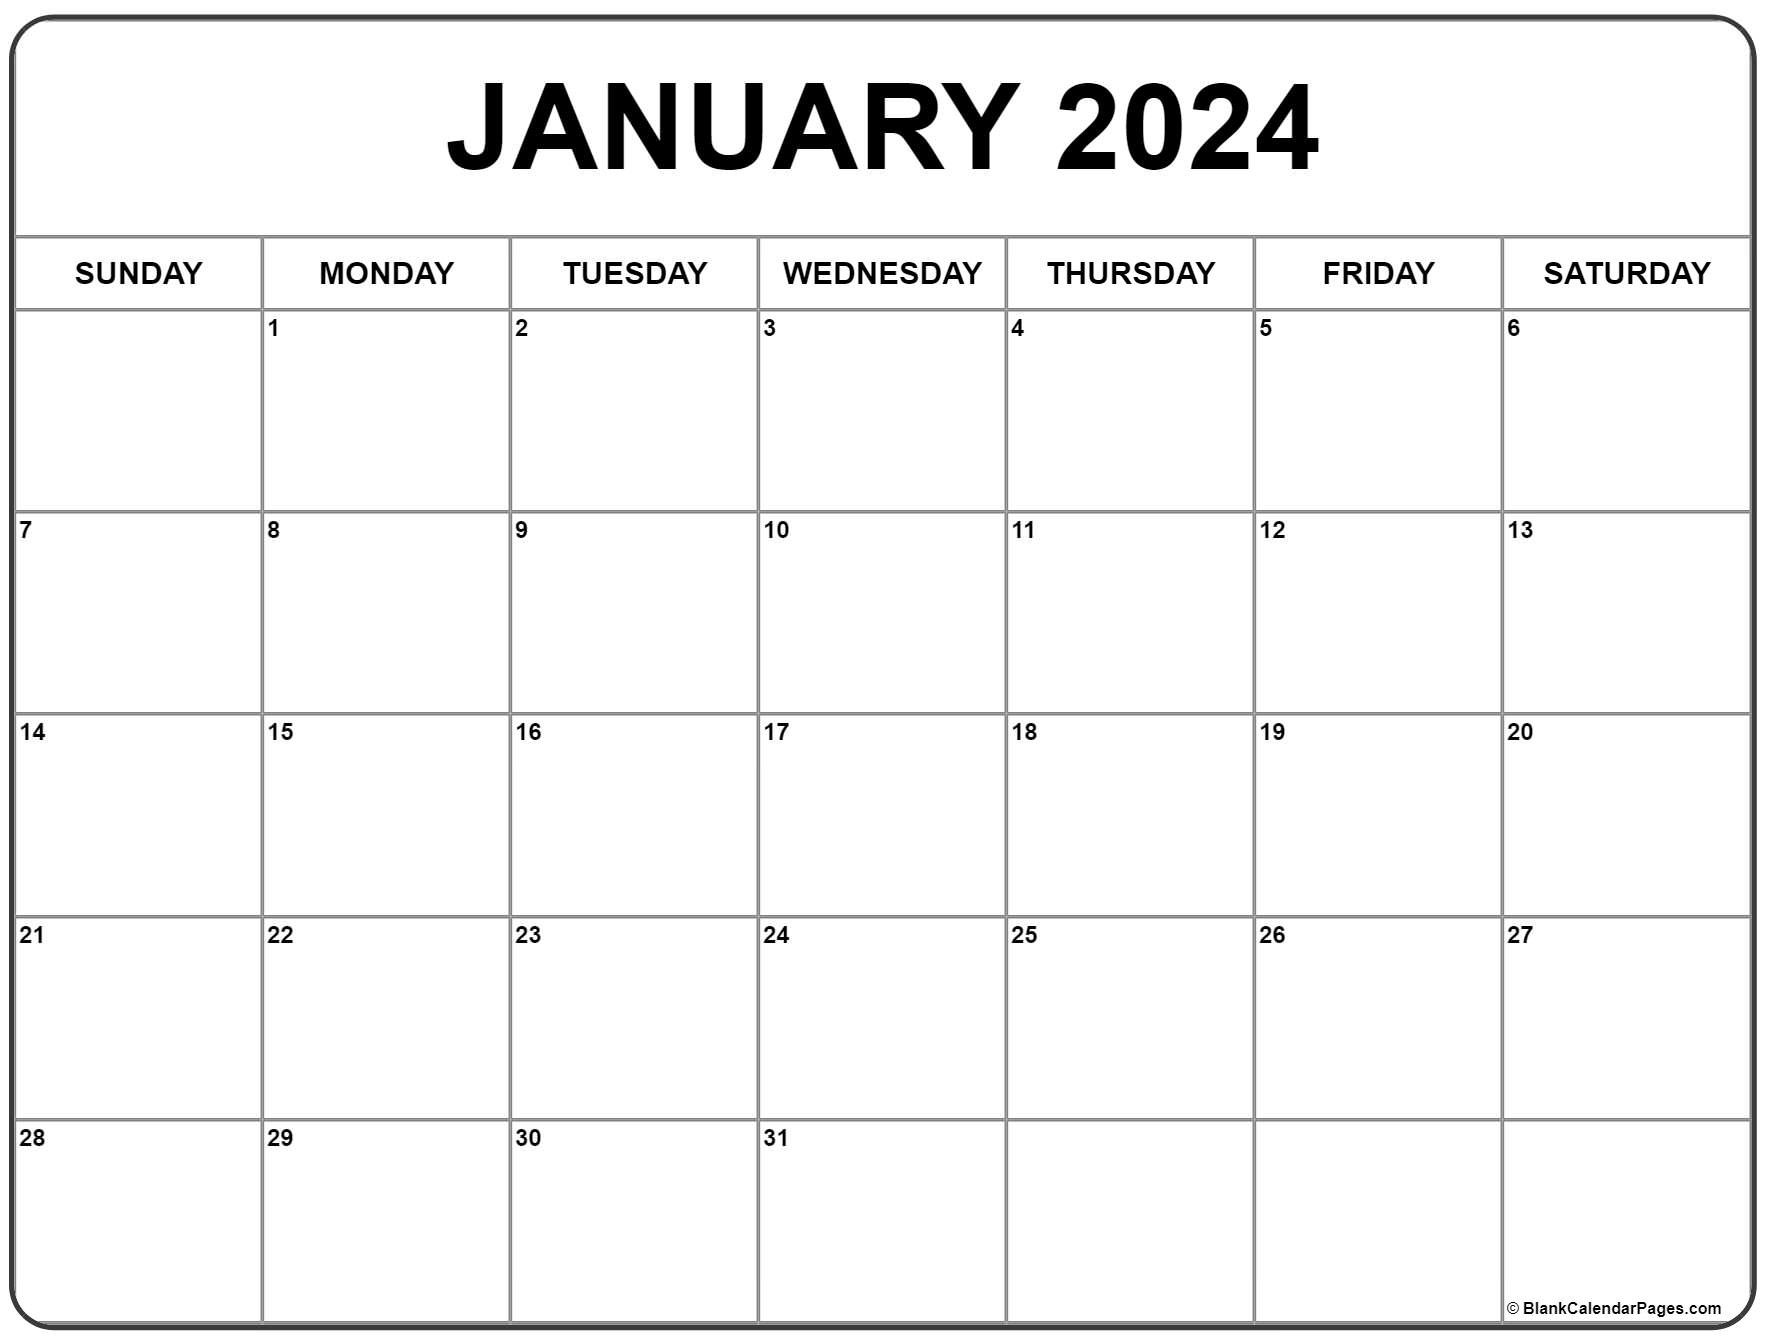 Print 2022 Calendar By Month January 2022 Calendar | Free Printable Calendar Templates